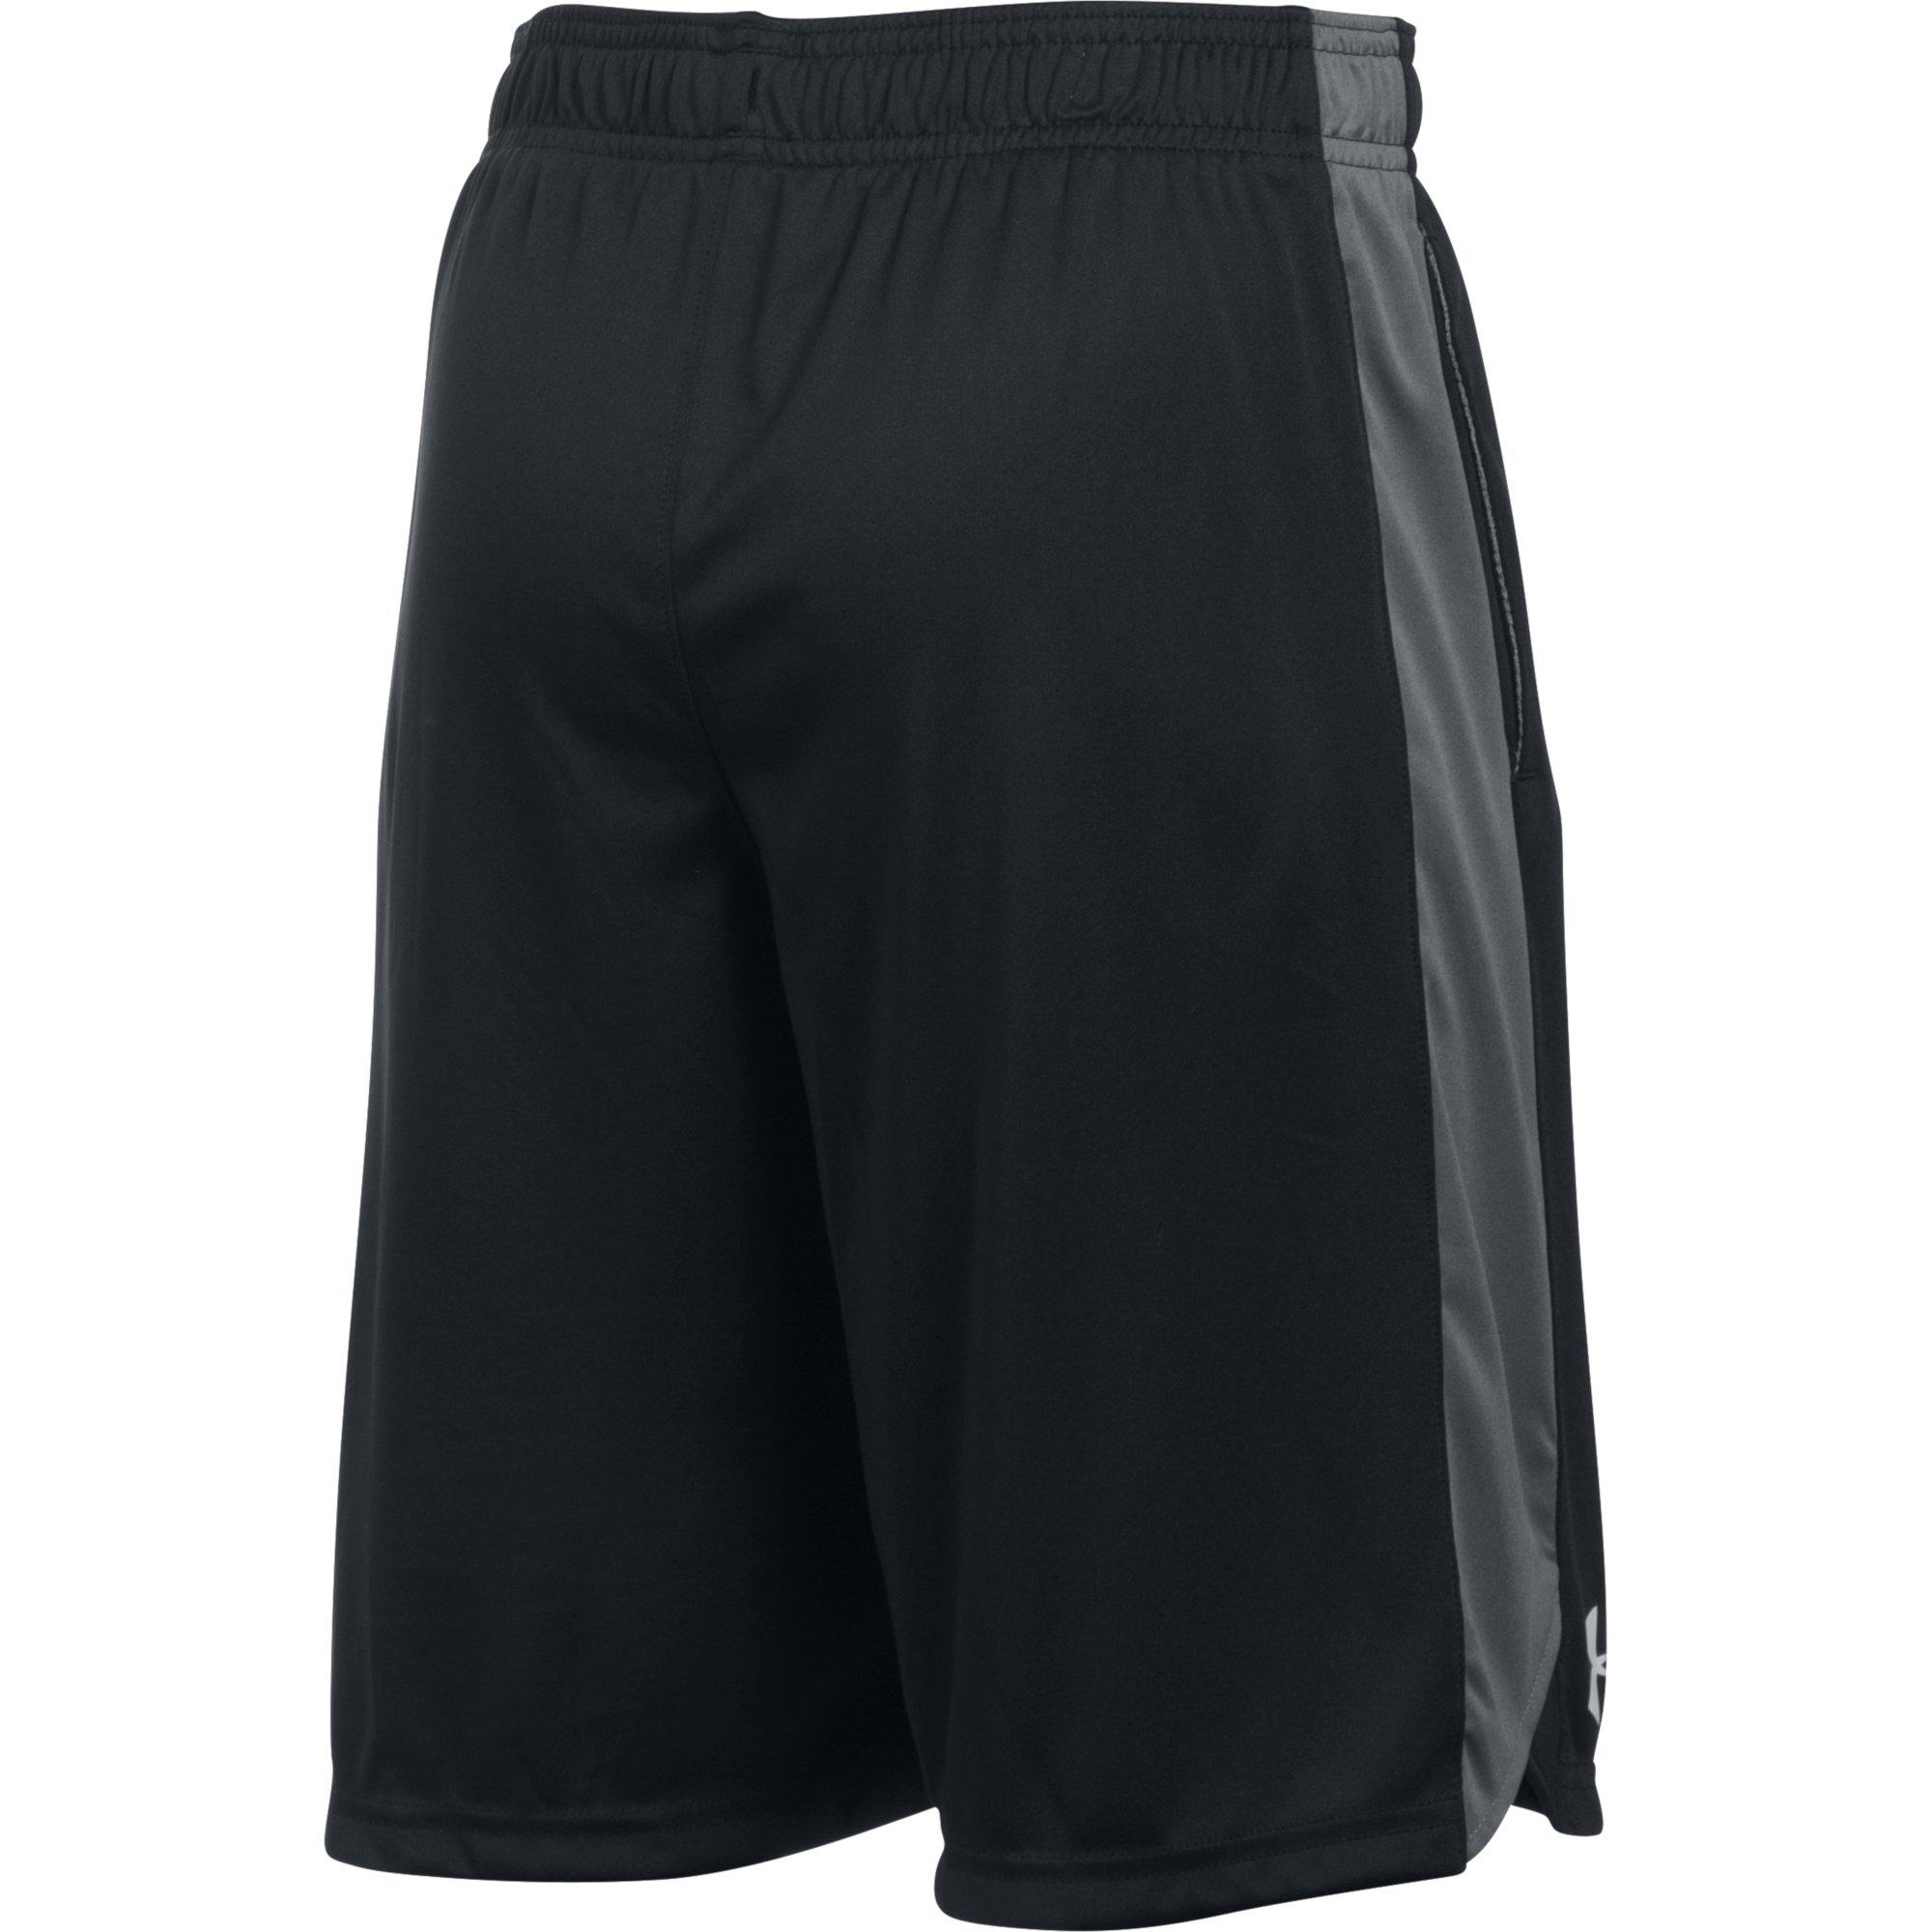 Under Armour Boys Eliminator Shorts - Black/Grey - Tennisnuts.com